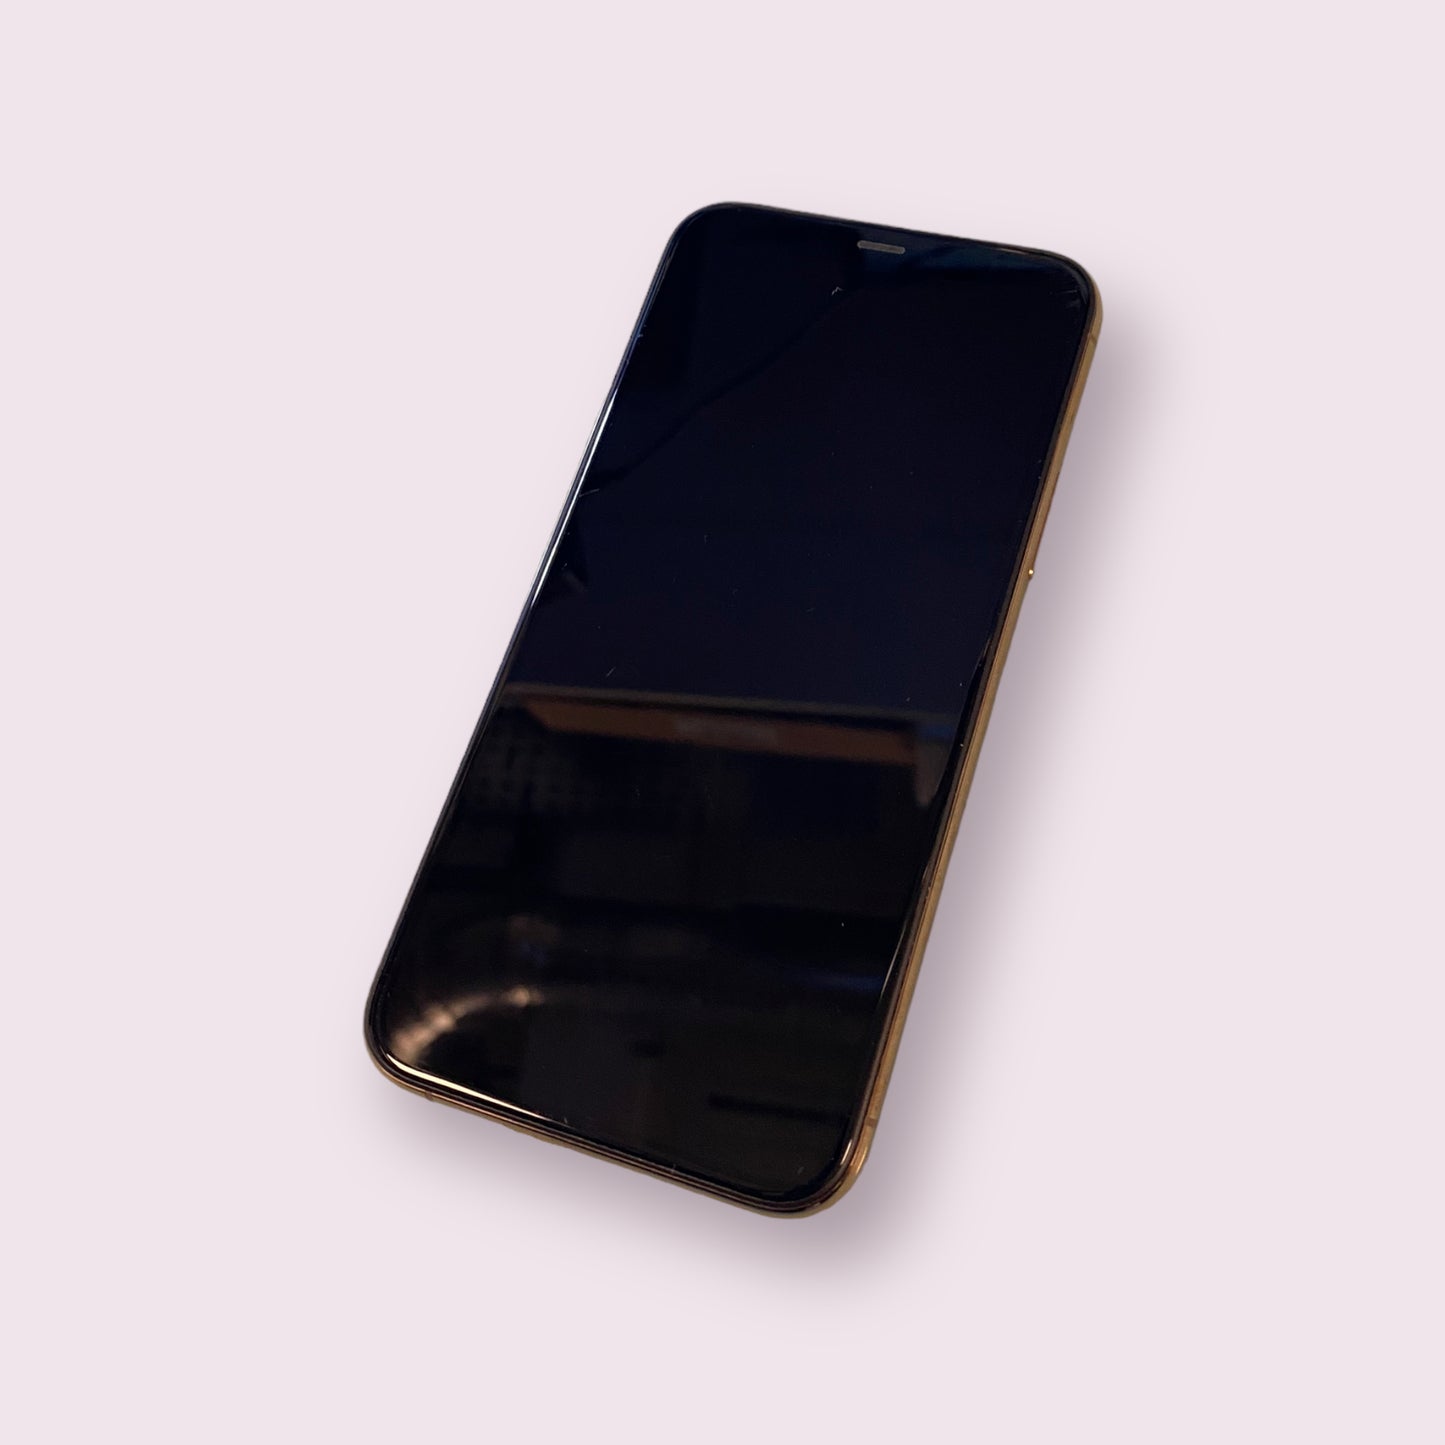 Apple iPhone 11 Pro 64GB Gold - Unlocked - Grade B - BH100